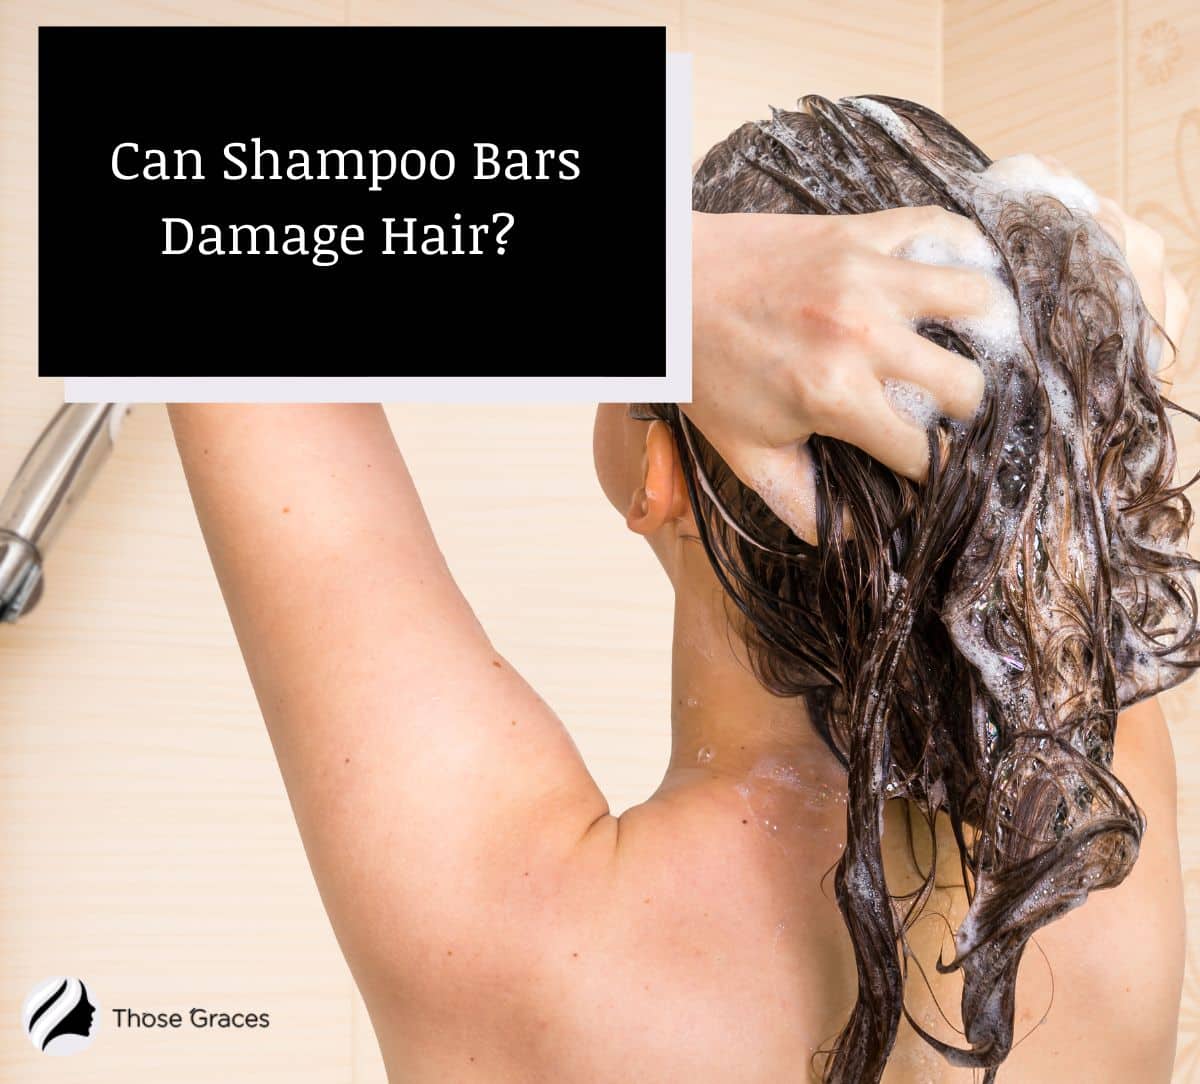 lady washing her hair with a shampoo bar but Can shampoo bars damage hair?